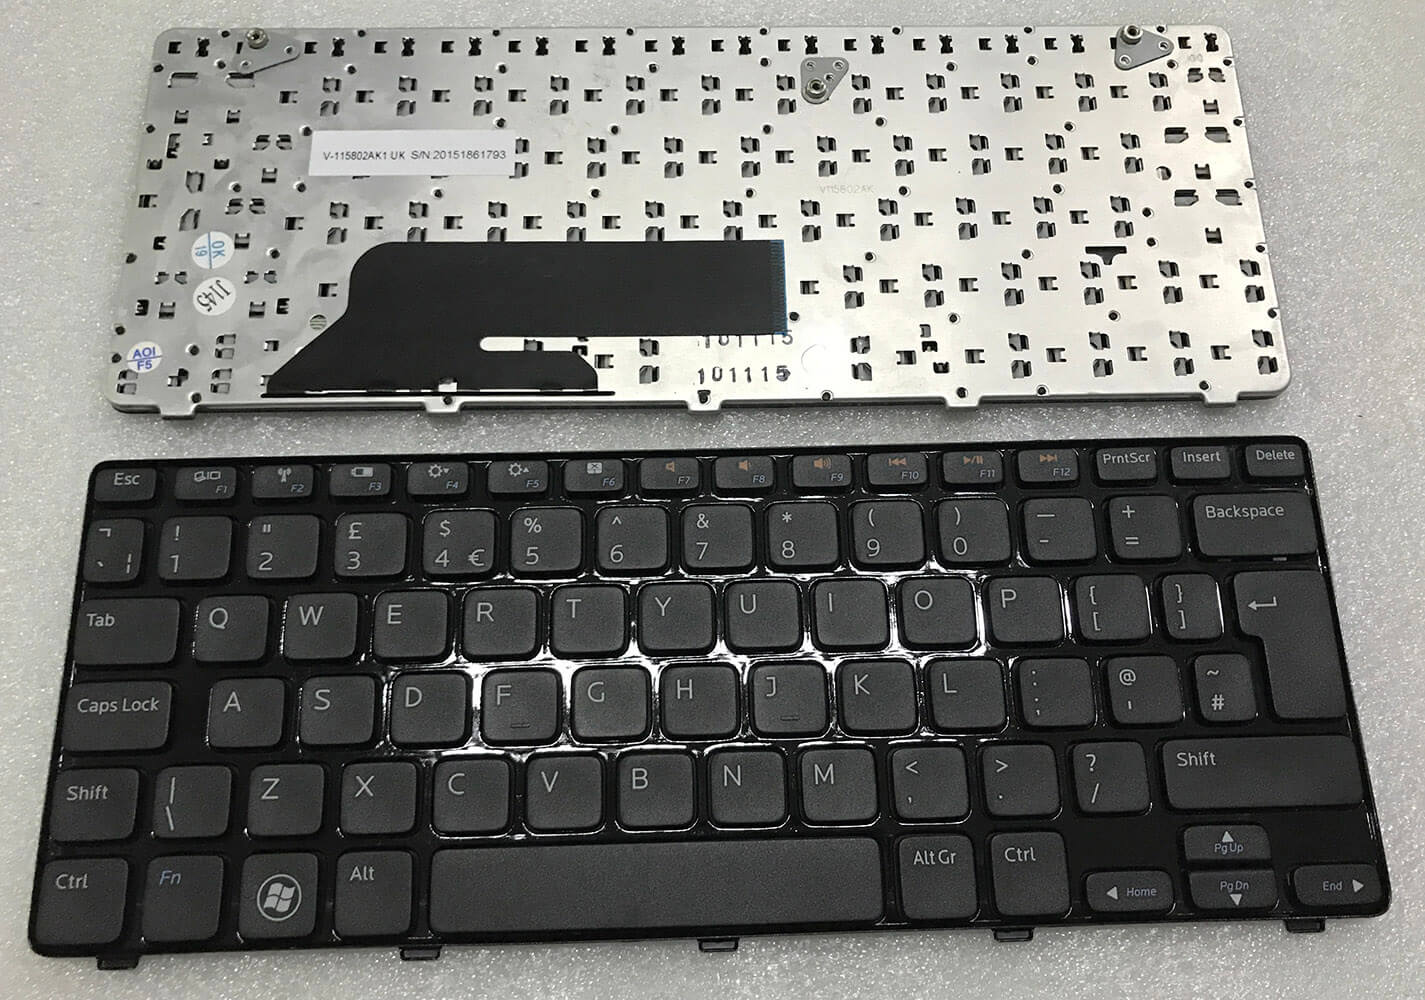 Dell Inspiron M101 Keyboard